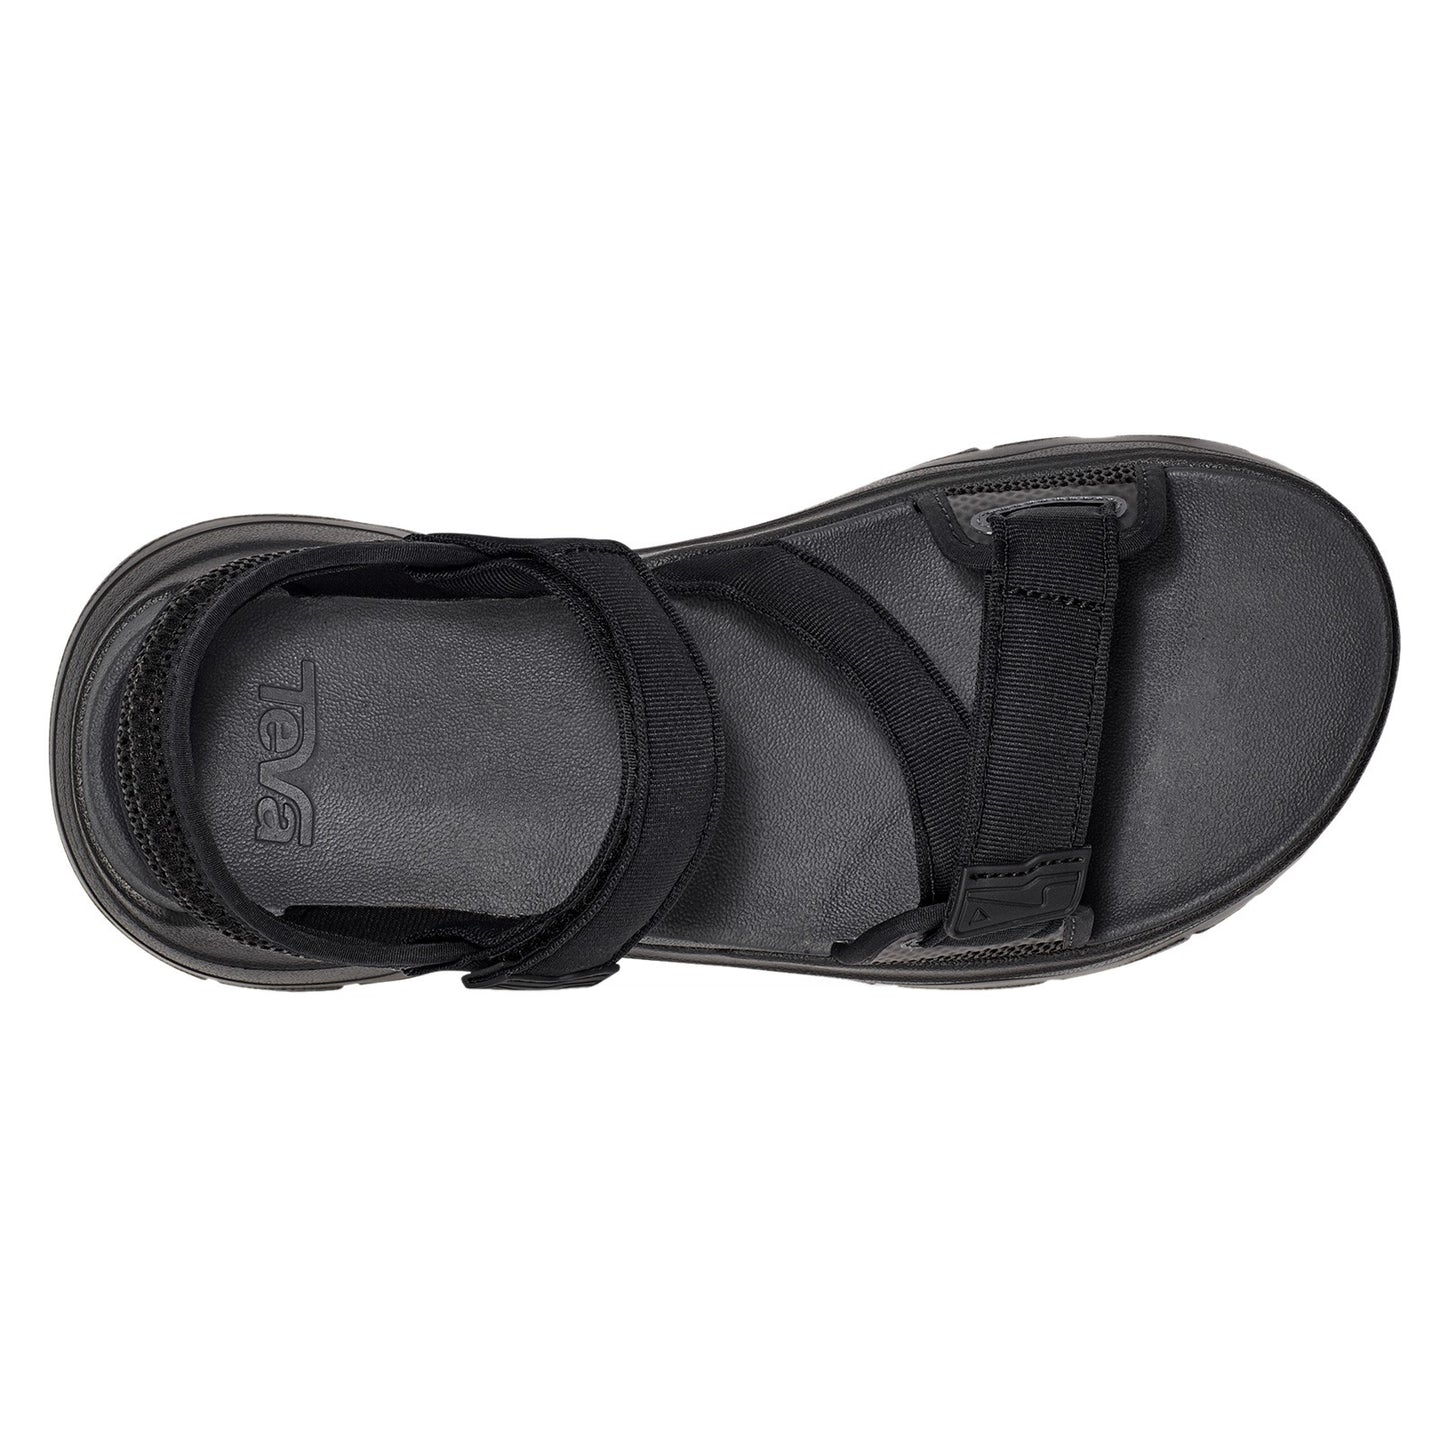 Peltz Shoes  Men's Teva Zymic Sandal BLACK 1124049-BLK